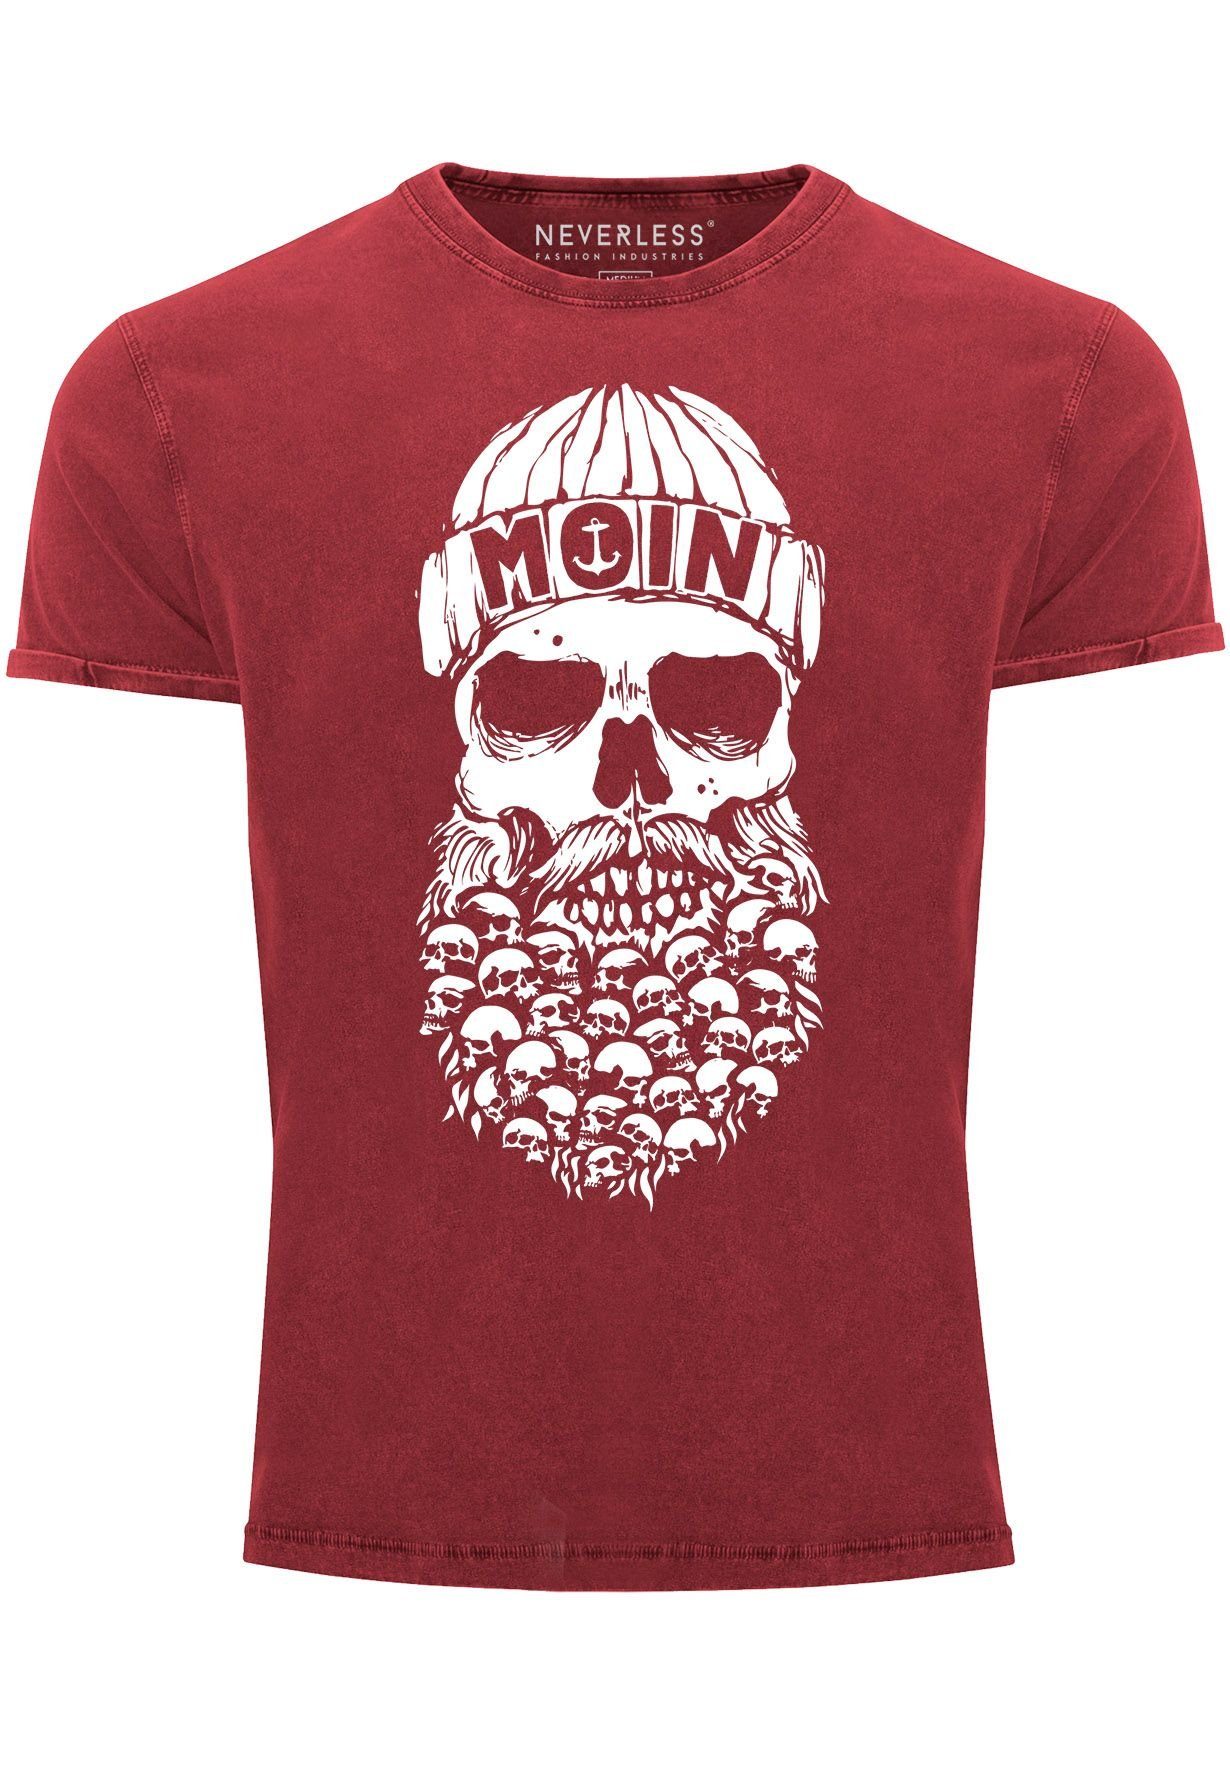 Neverless Print-Shirt Herren Vintage Shirt Totenkopf Nordisch Moin Hamburg Dialekt Skull Ank mit Print rot